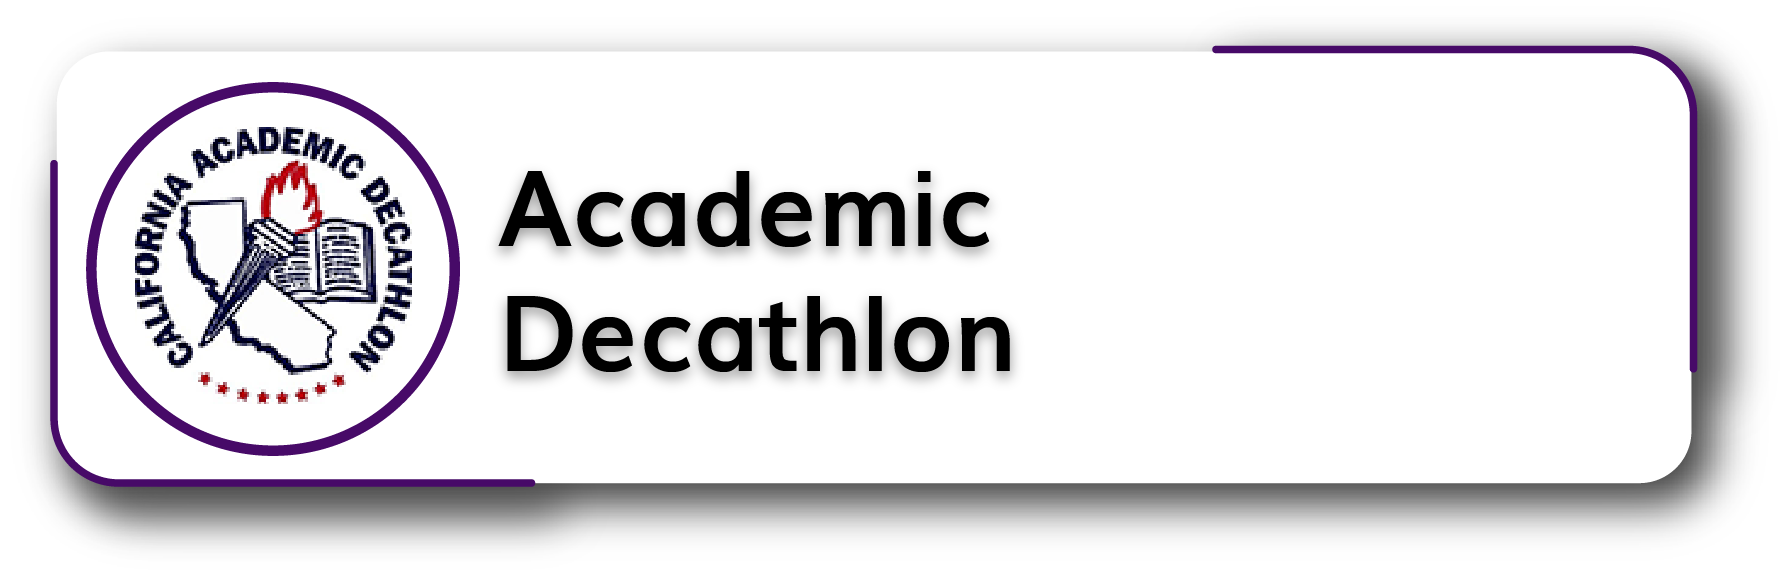 Academic Decathlon Button